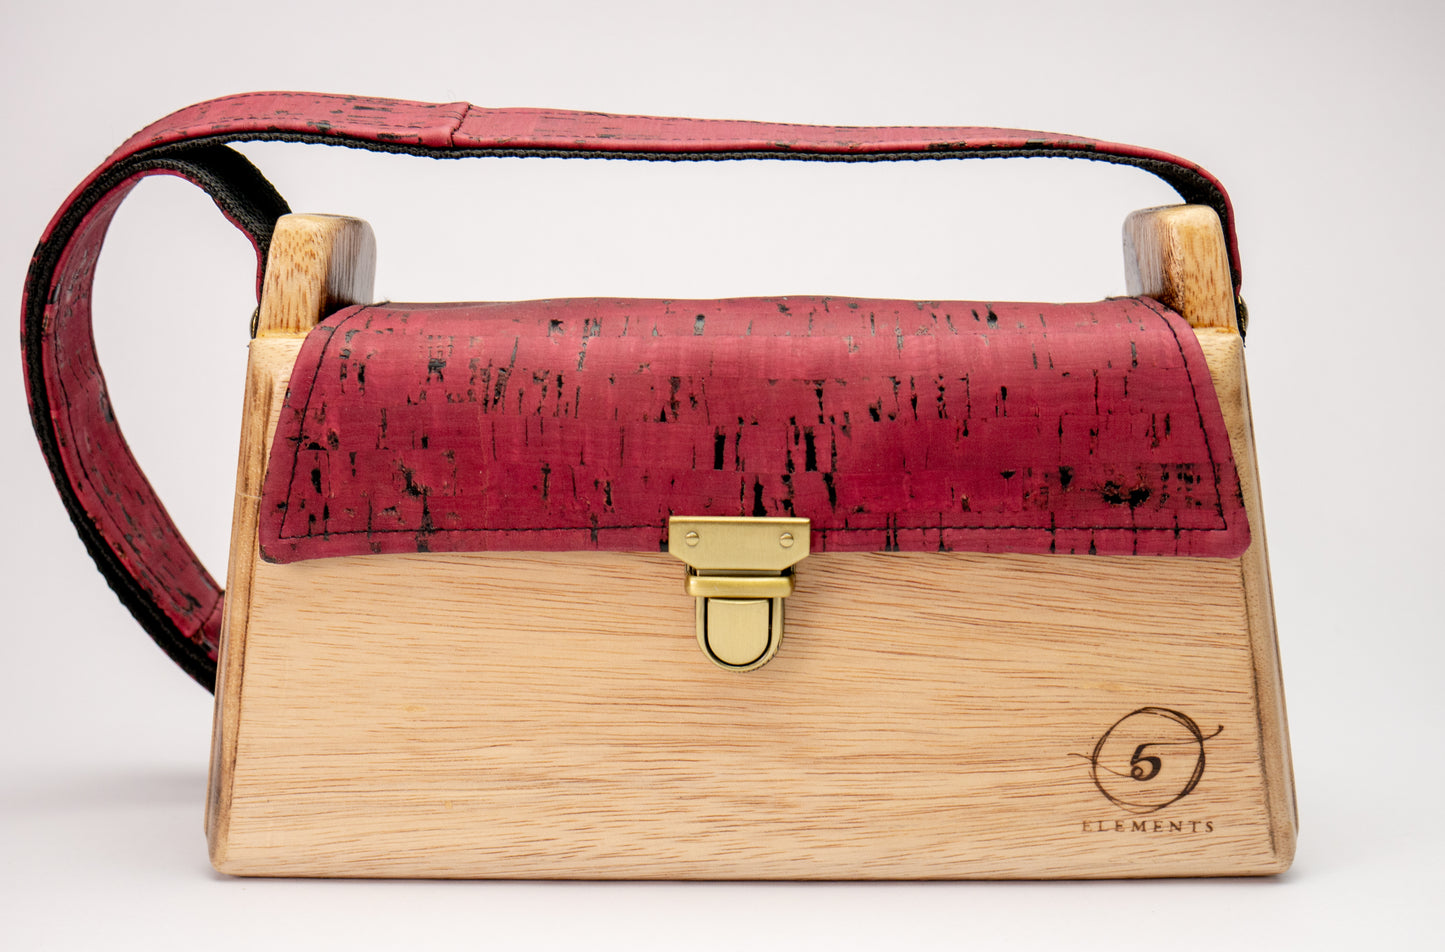 Wooden handmade shoulder bag with red cork leather.